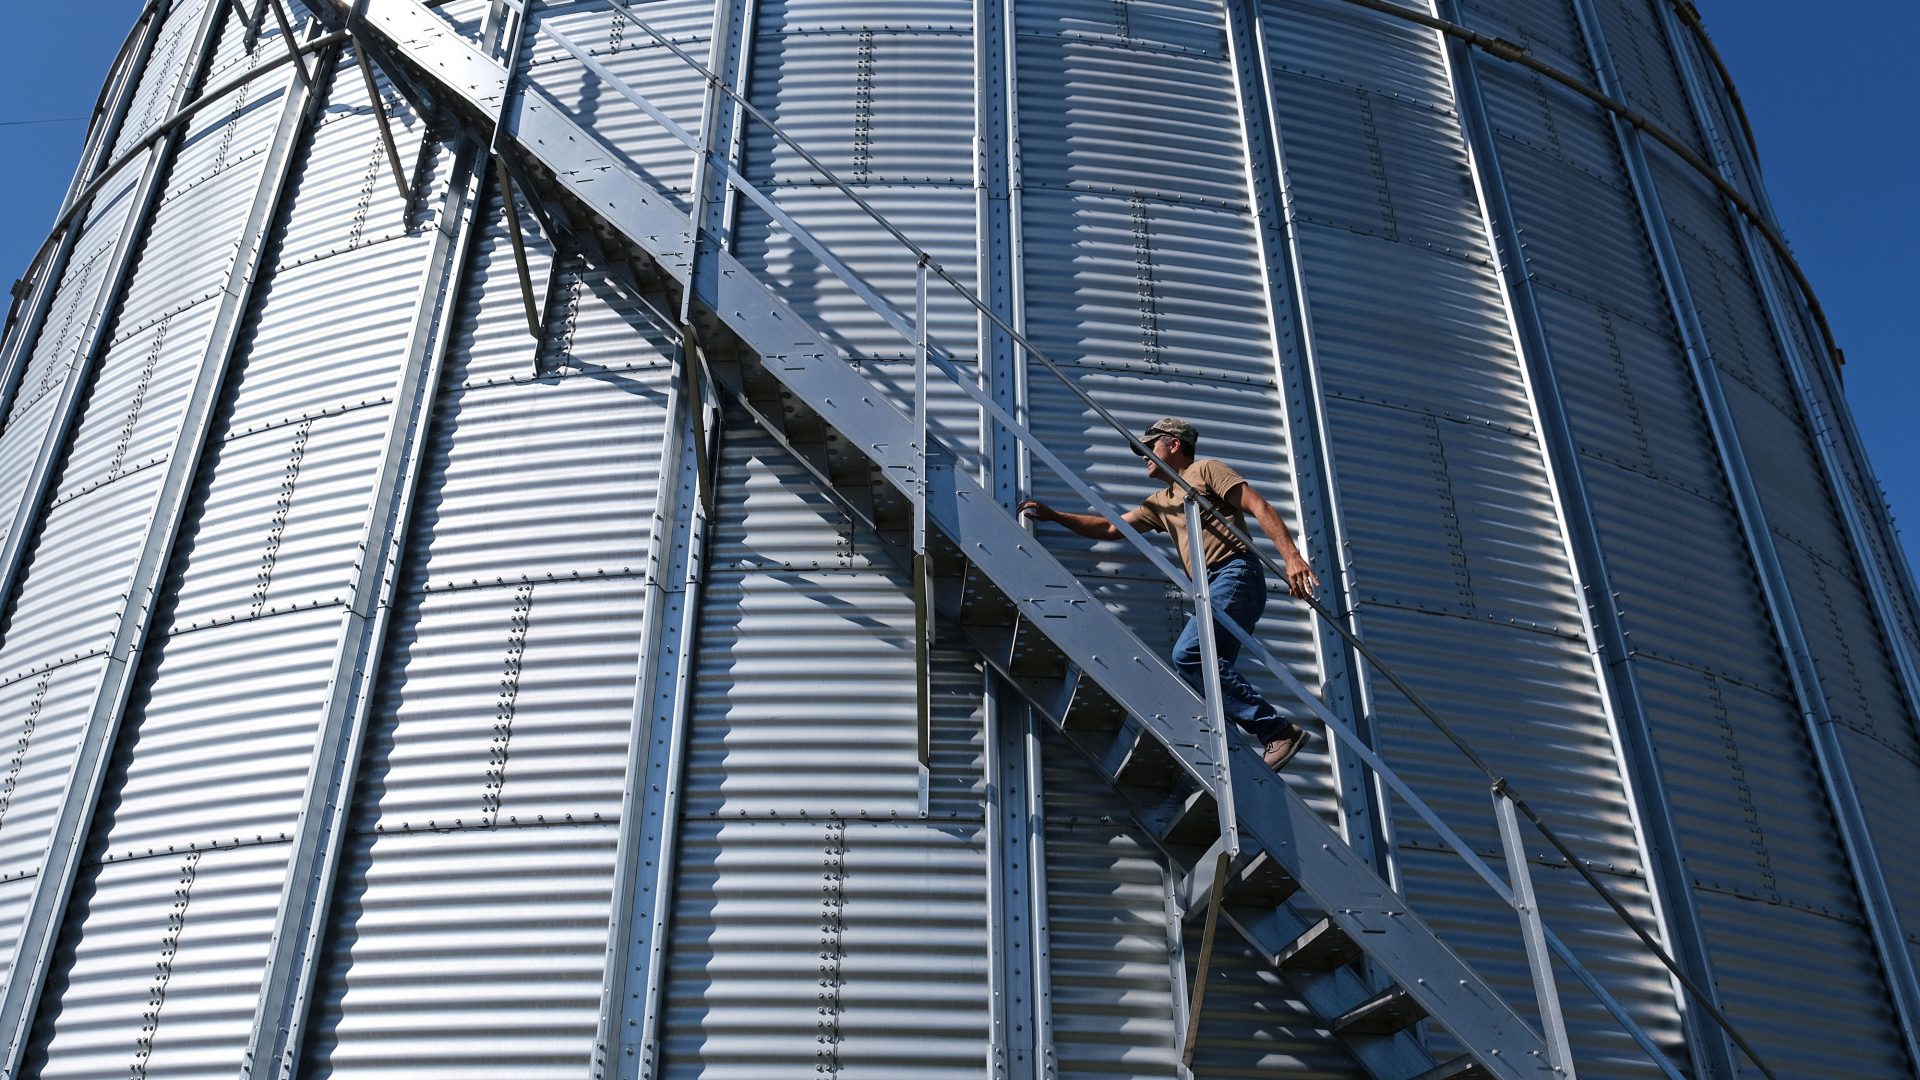 Grain farmer Don Cairns walks to the top of a grain silo Sept. 25, 2019, at Cairns Family Farm in Sadsbury Township, Pennsylvania.